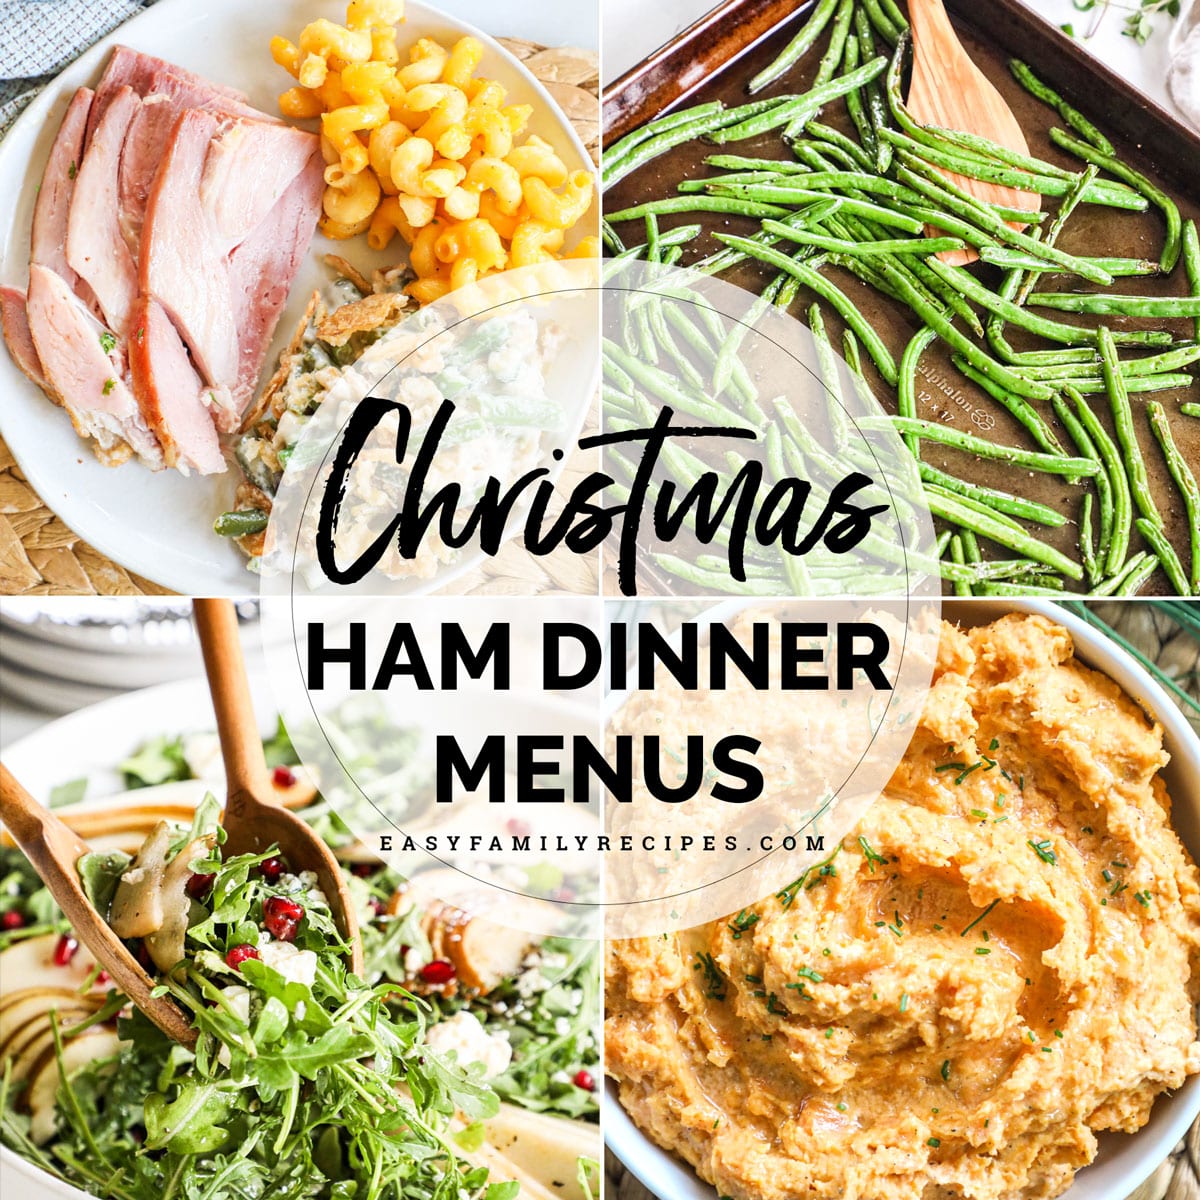 4 photos with text overlay Christmas Ham Dinner Menus